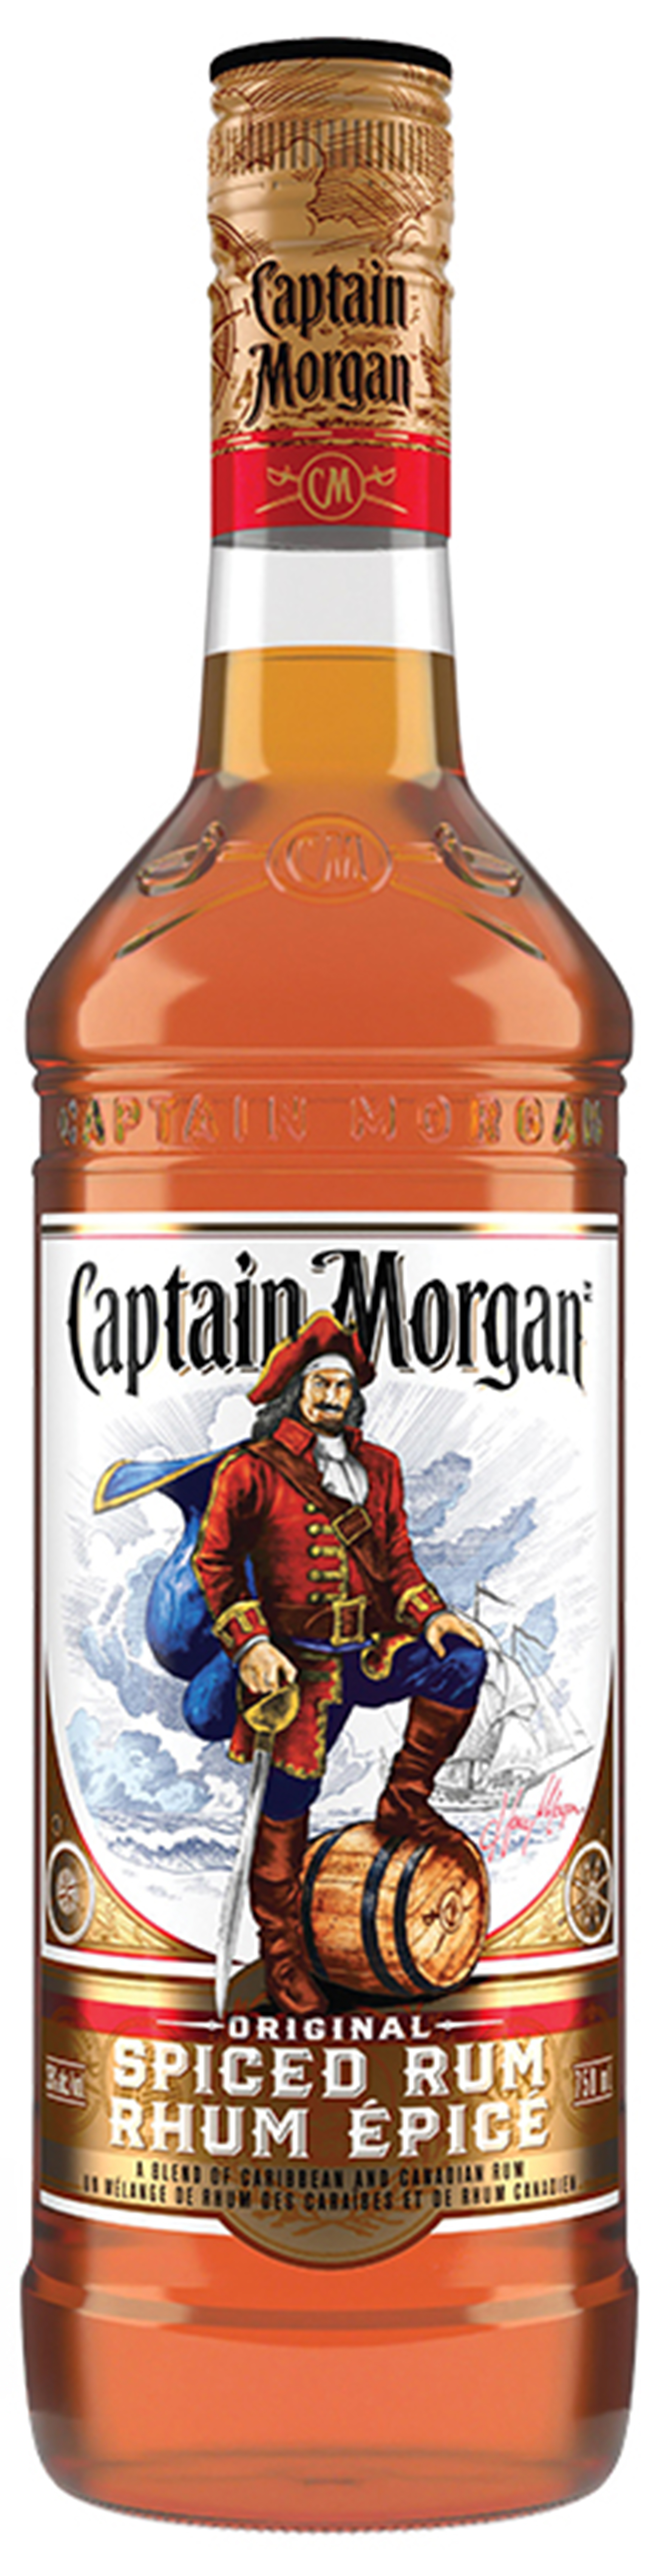 Morgan captain Captain Morgan